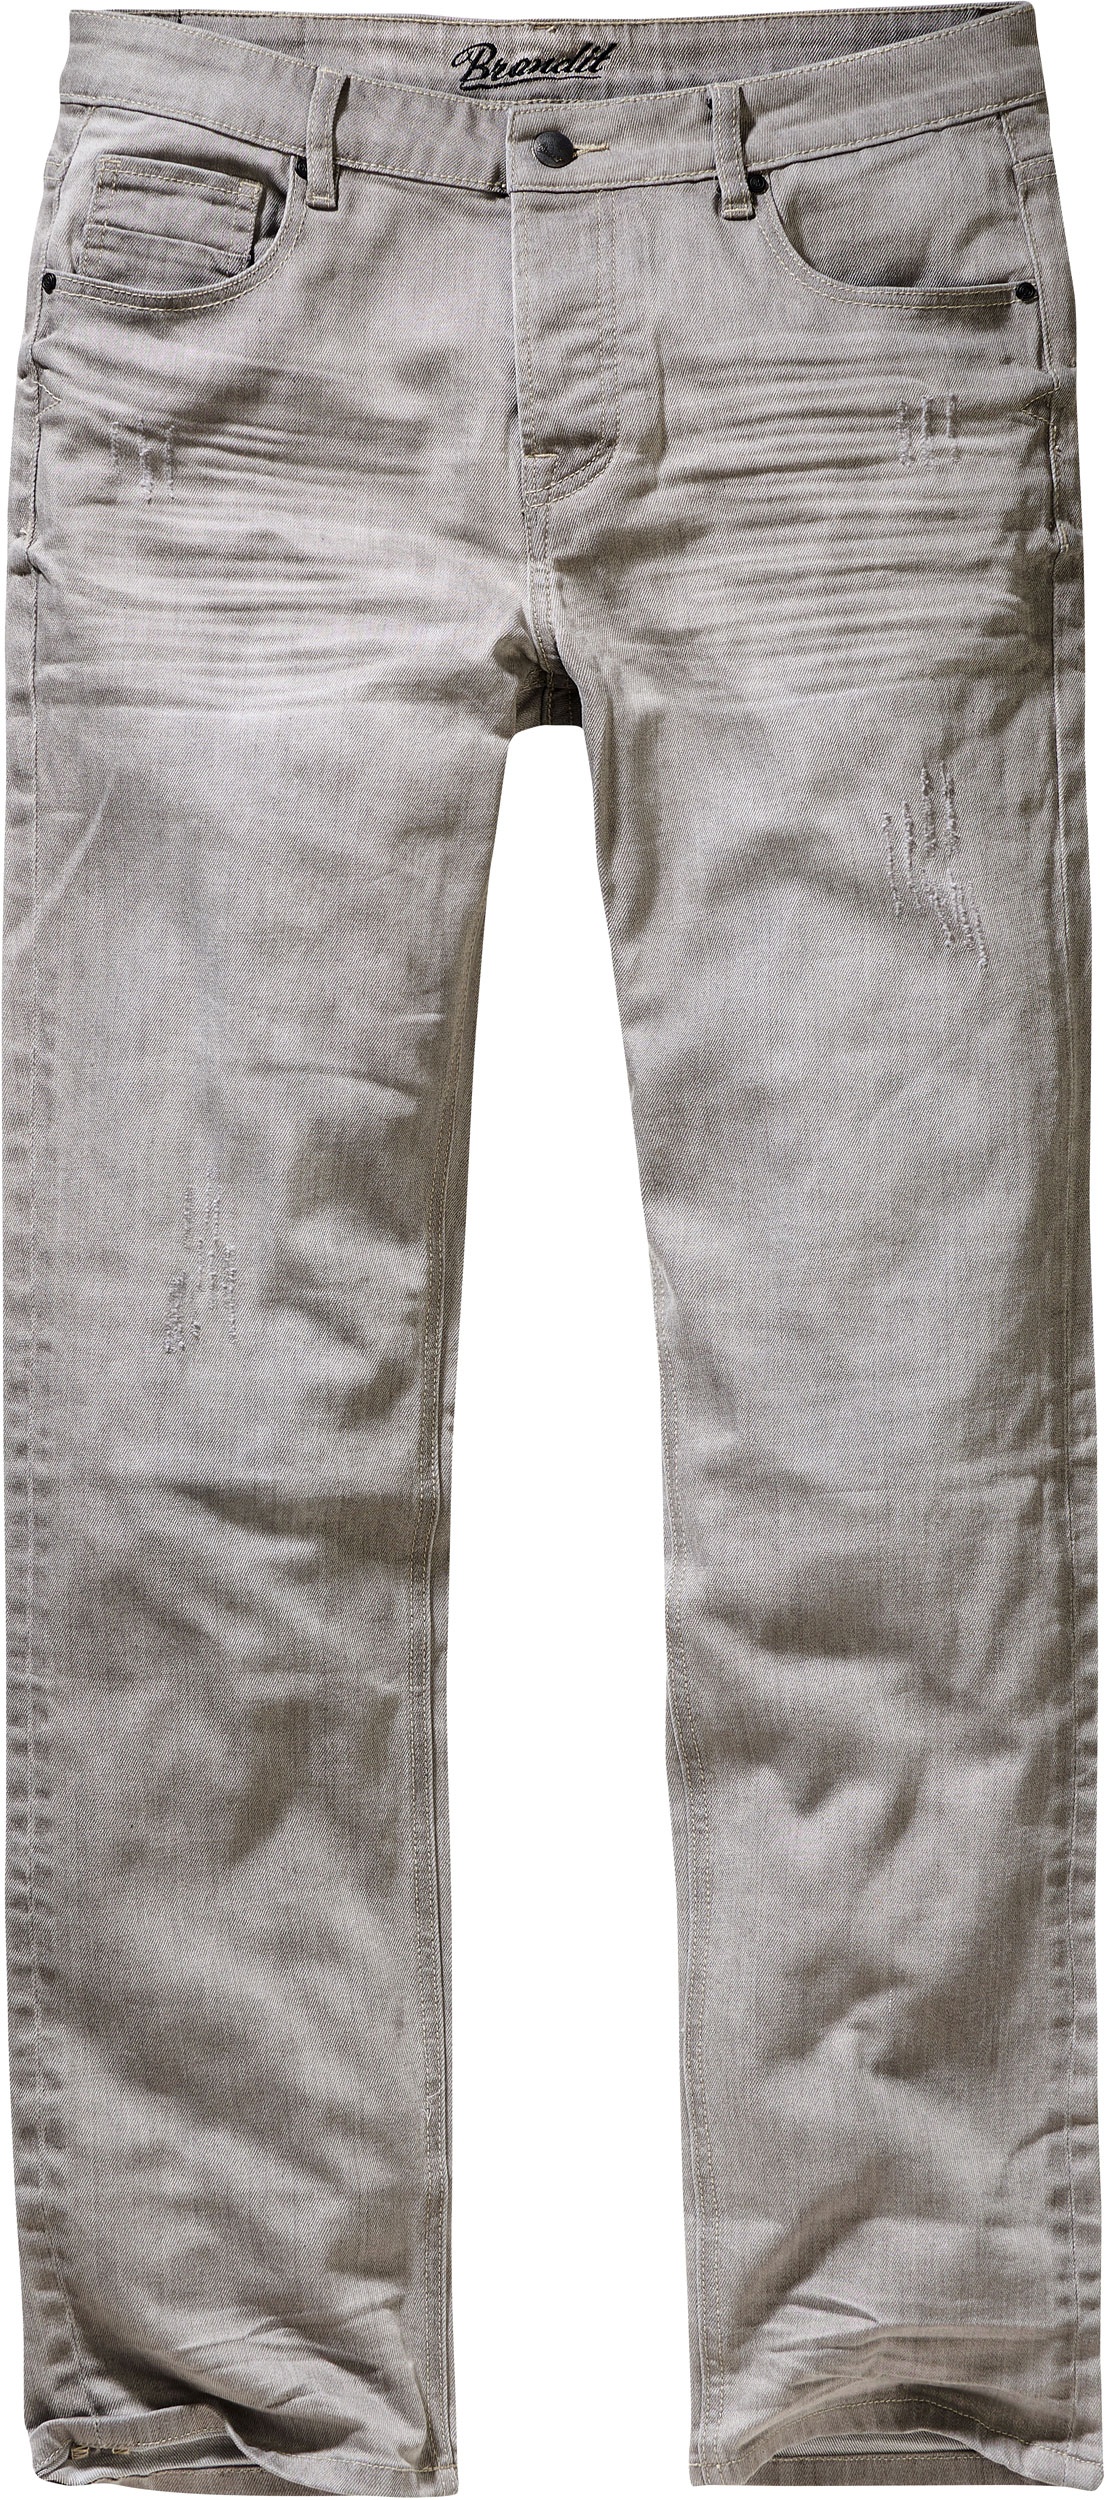 Brandit Jake Denim, Jeans - Gris - 34/34